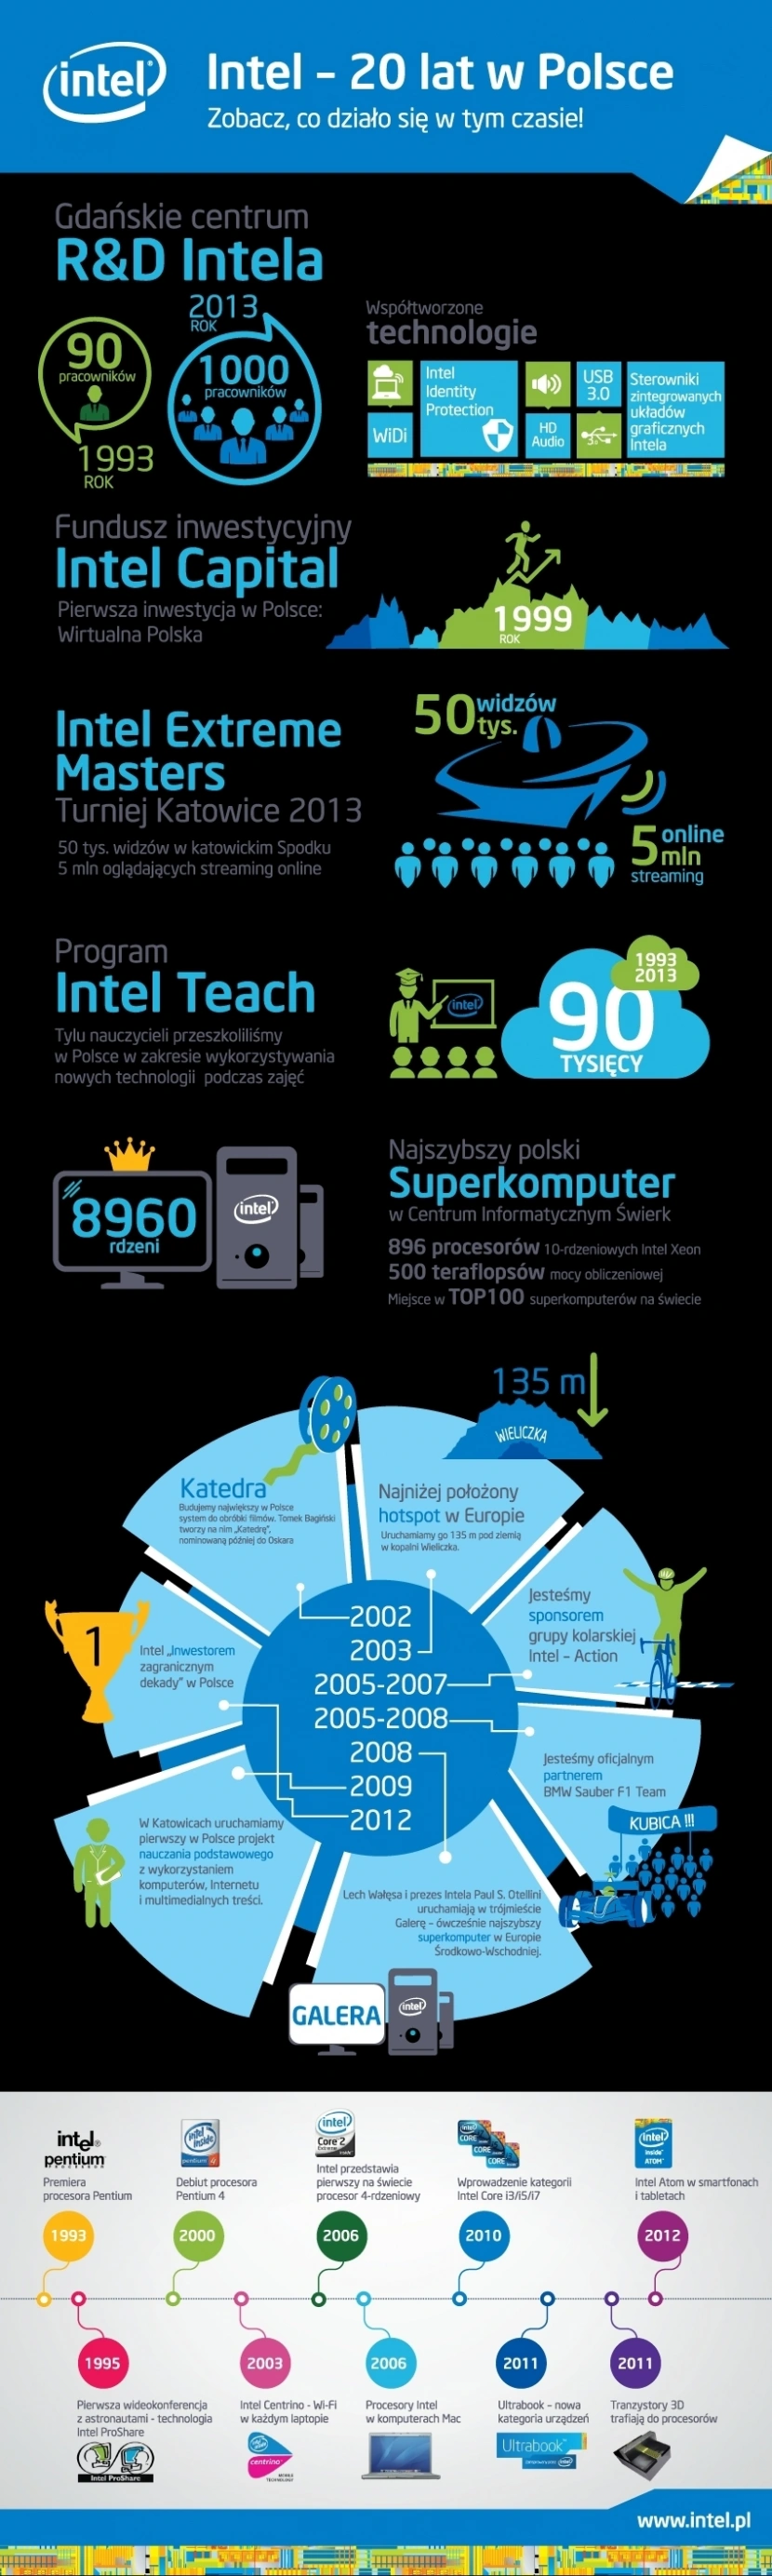 20-lecie Intela w Polsce